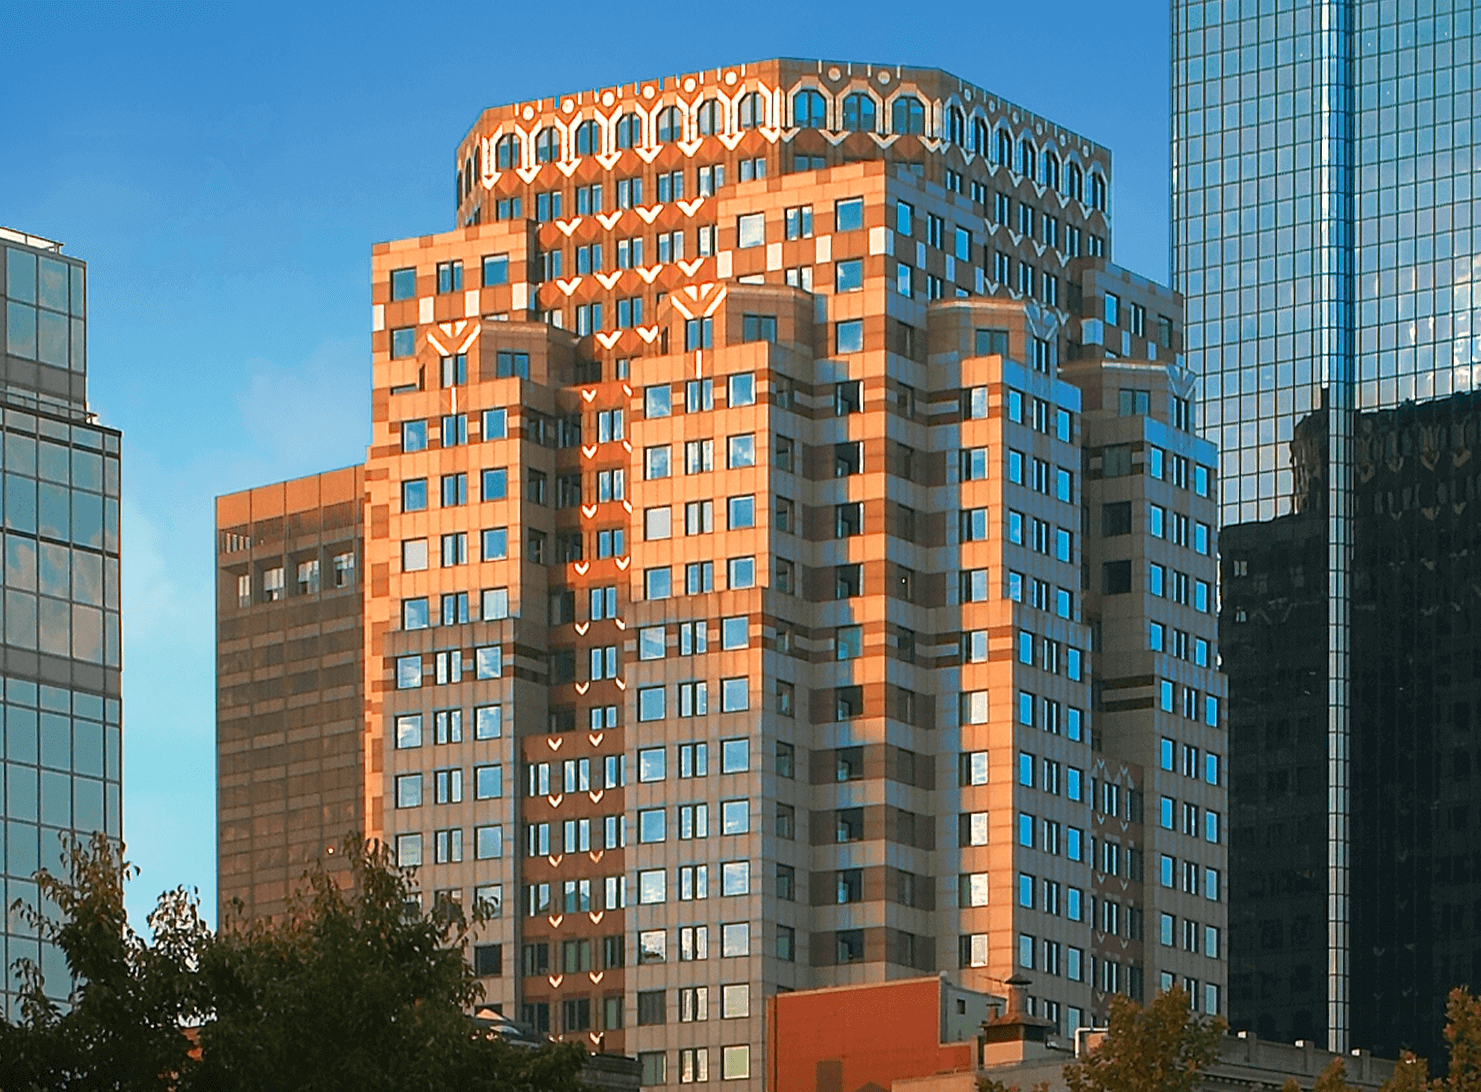 LPL Financial Boston campus